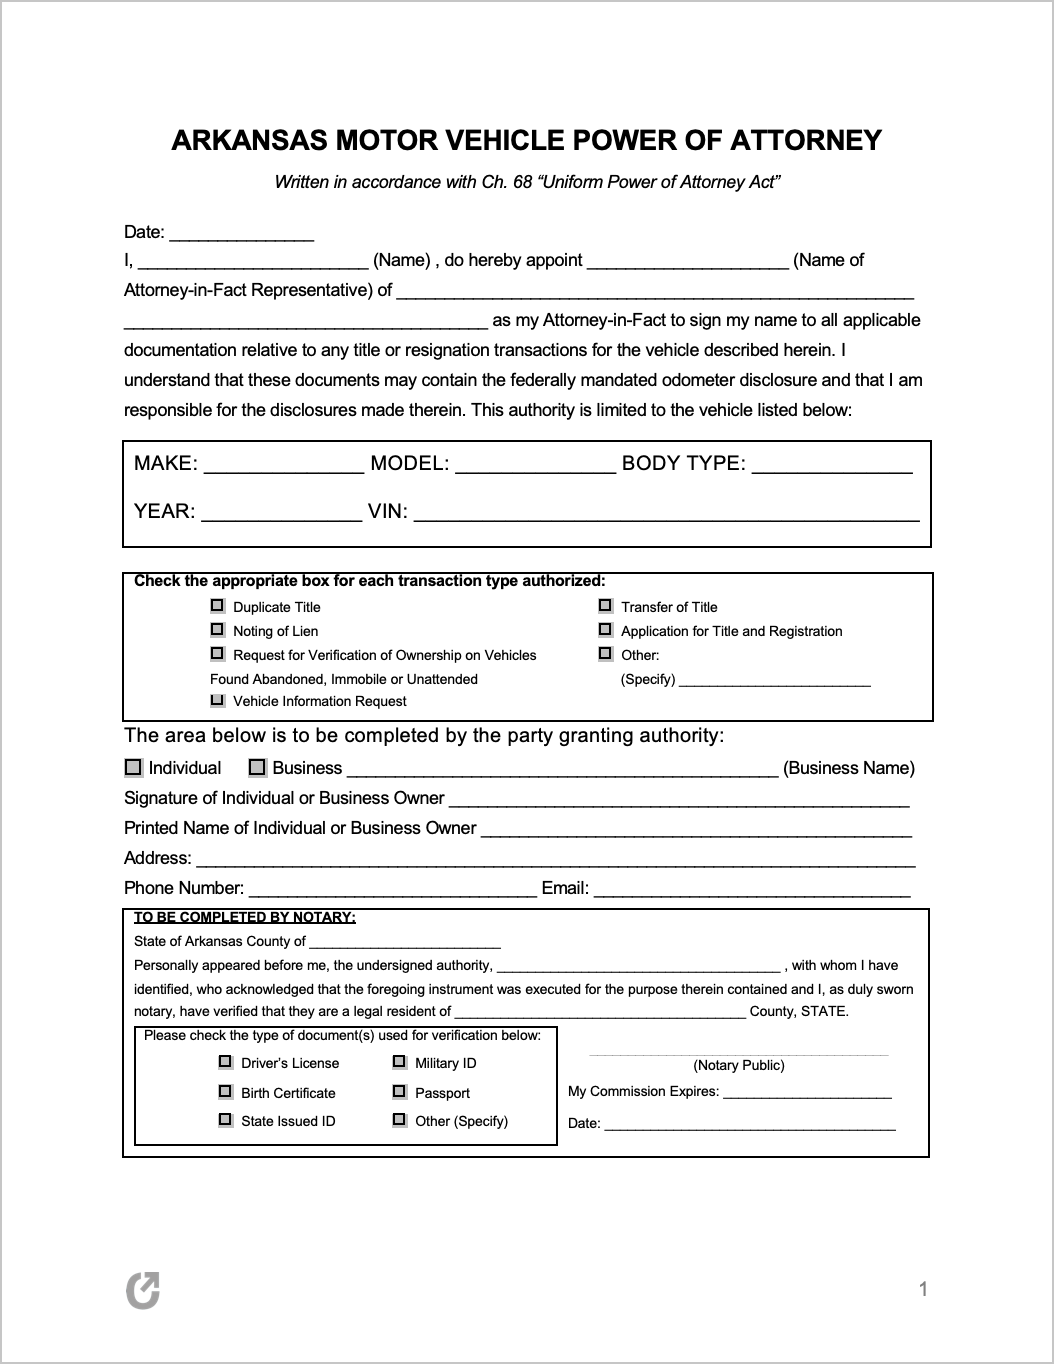 Free Arkansas Motor Vehicle Power of Attorney Form PDF WORD